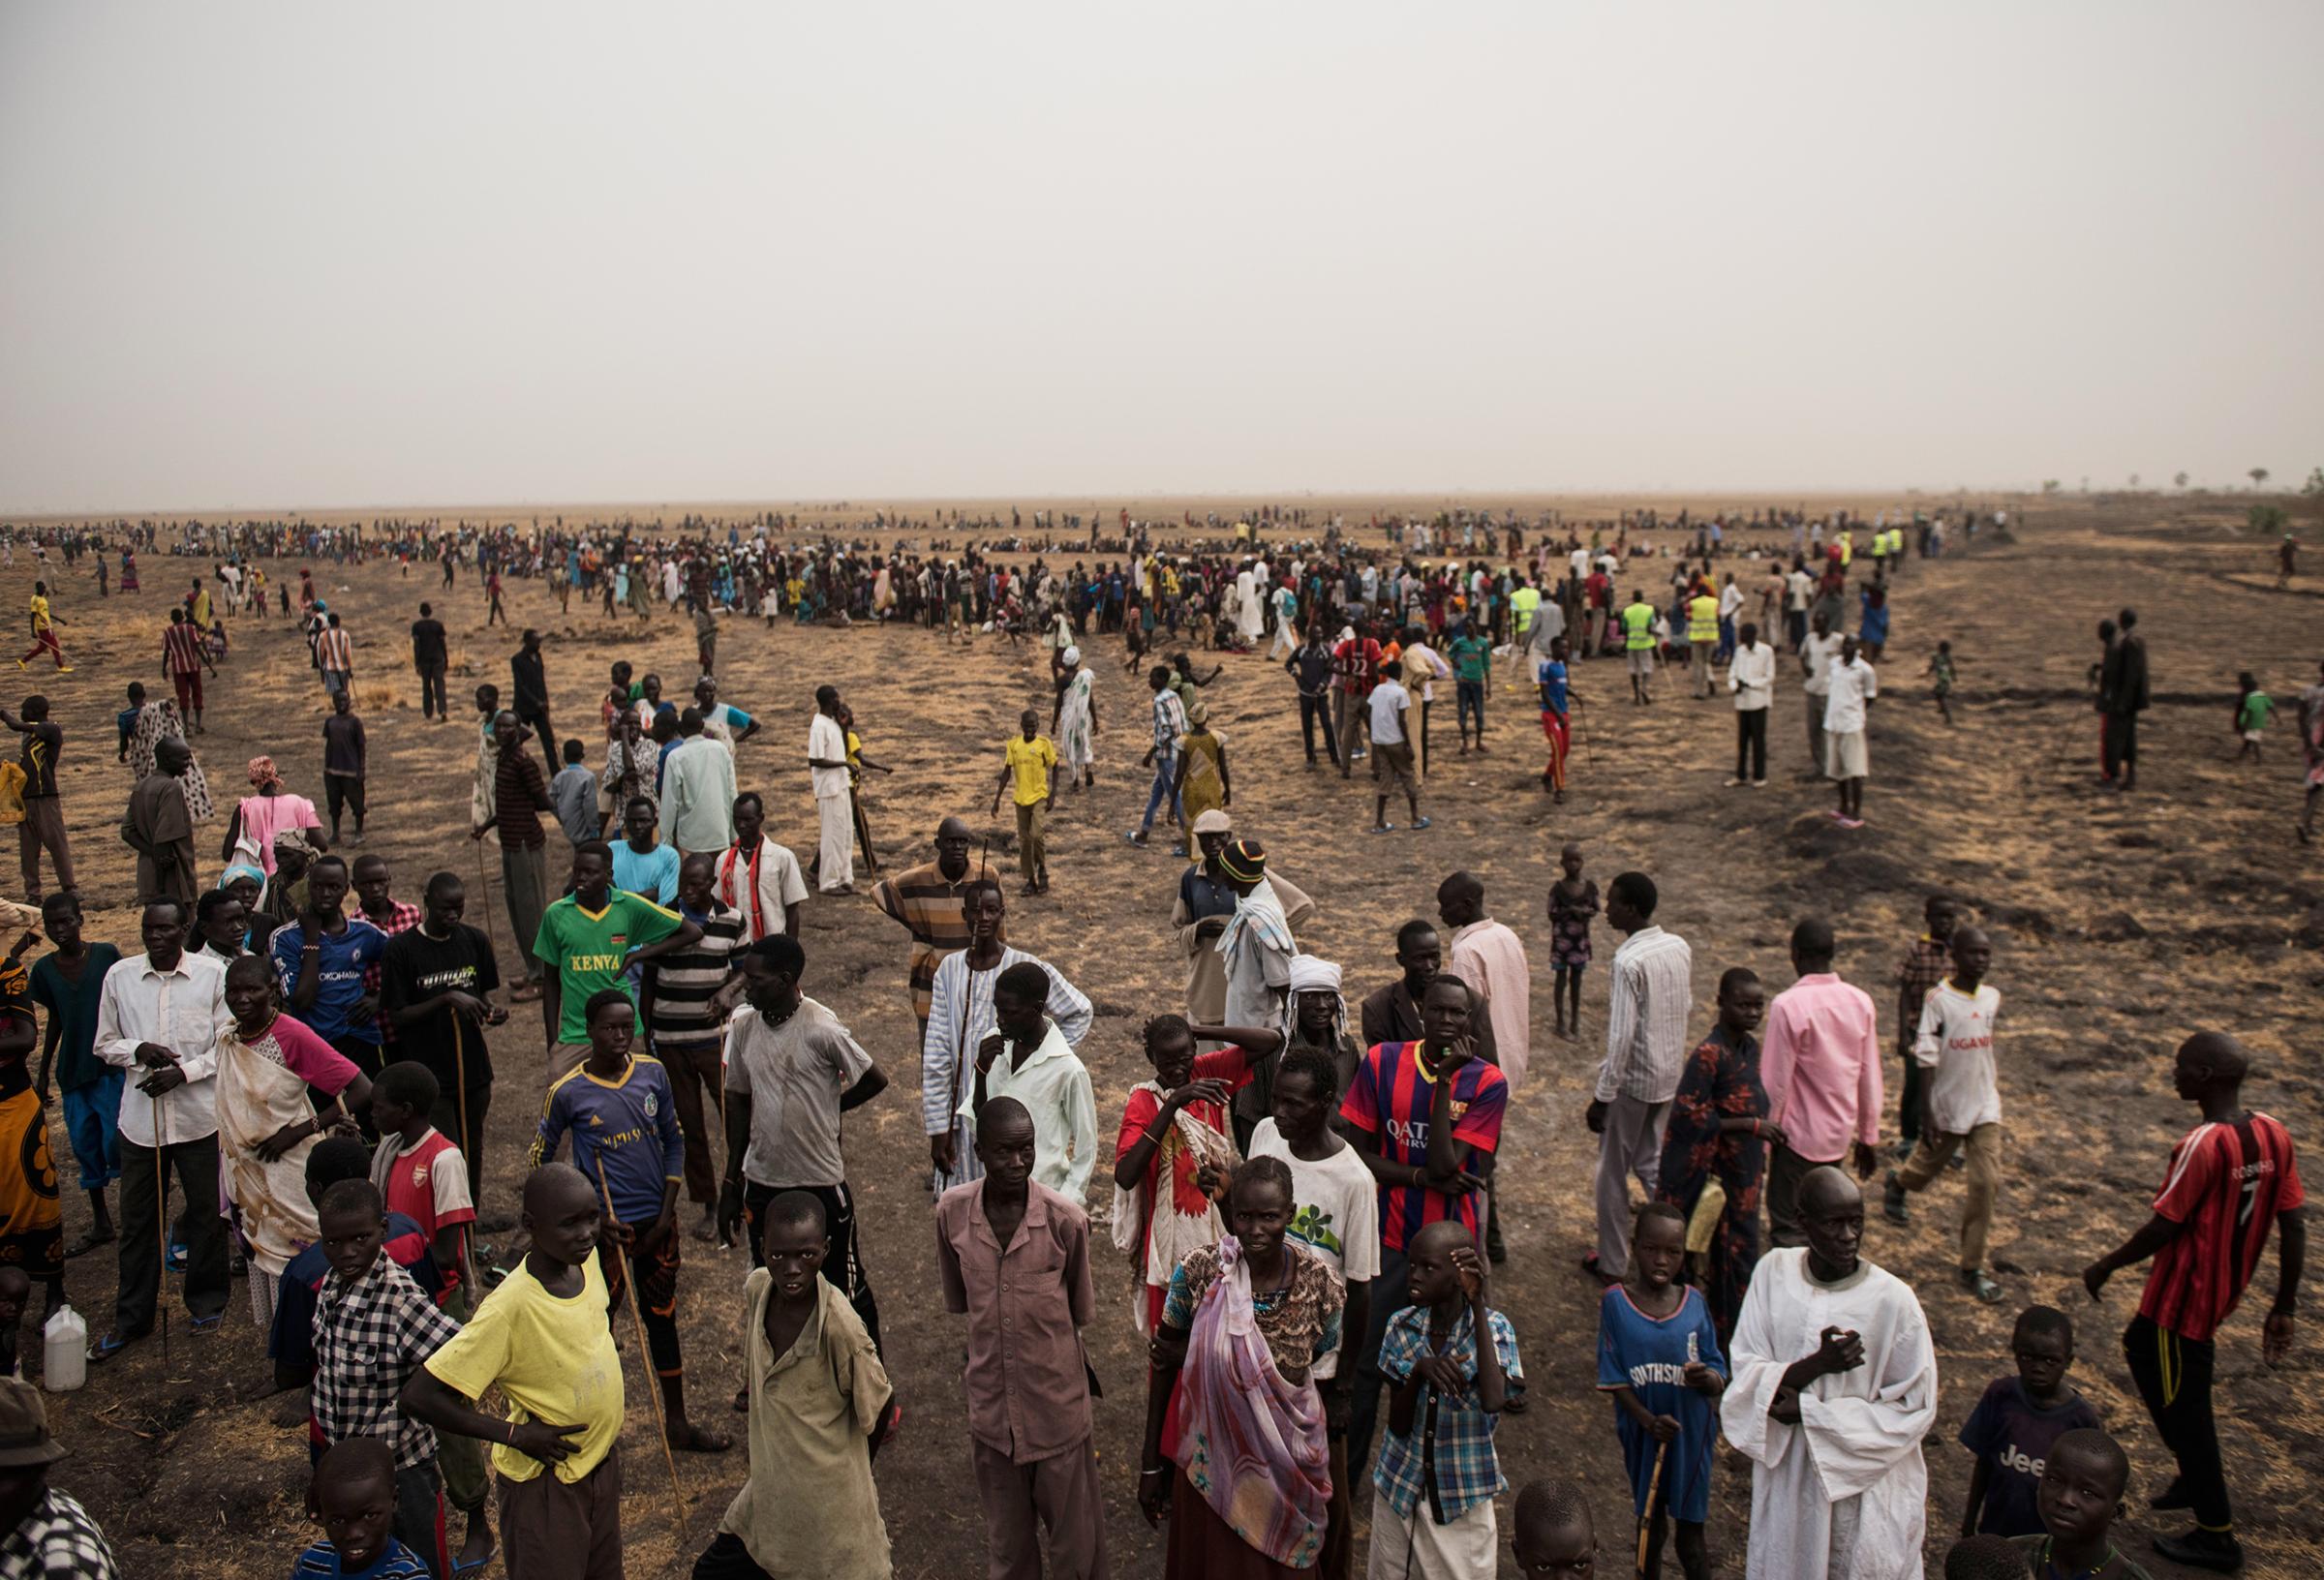 ynsey-addario-leer-south-sudan-civil-war-mass-grave